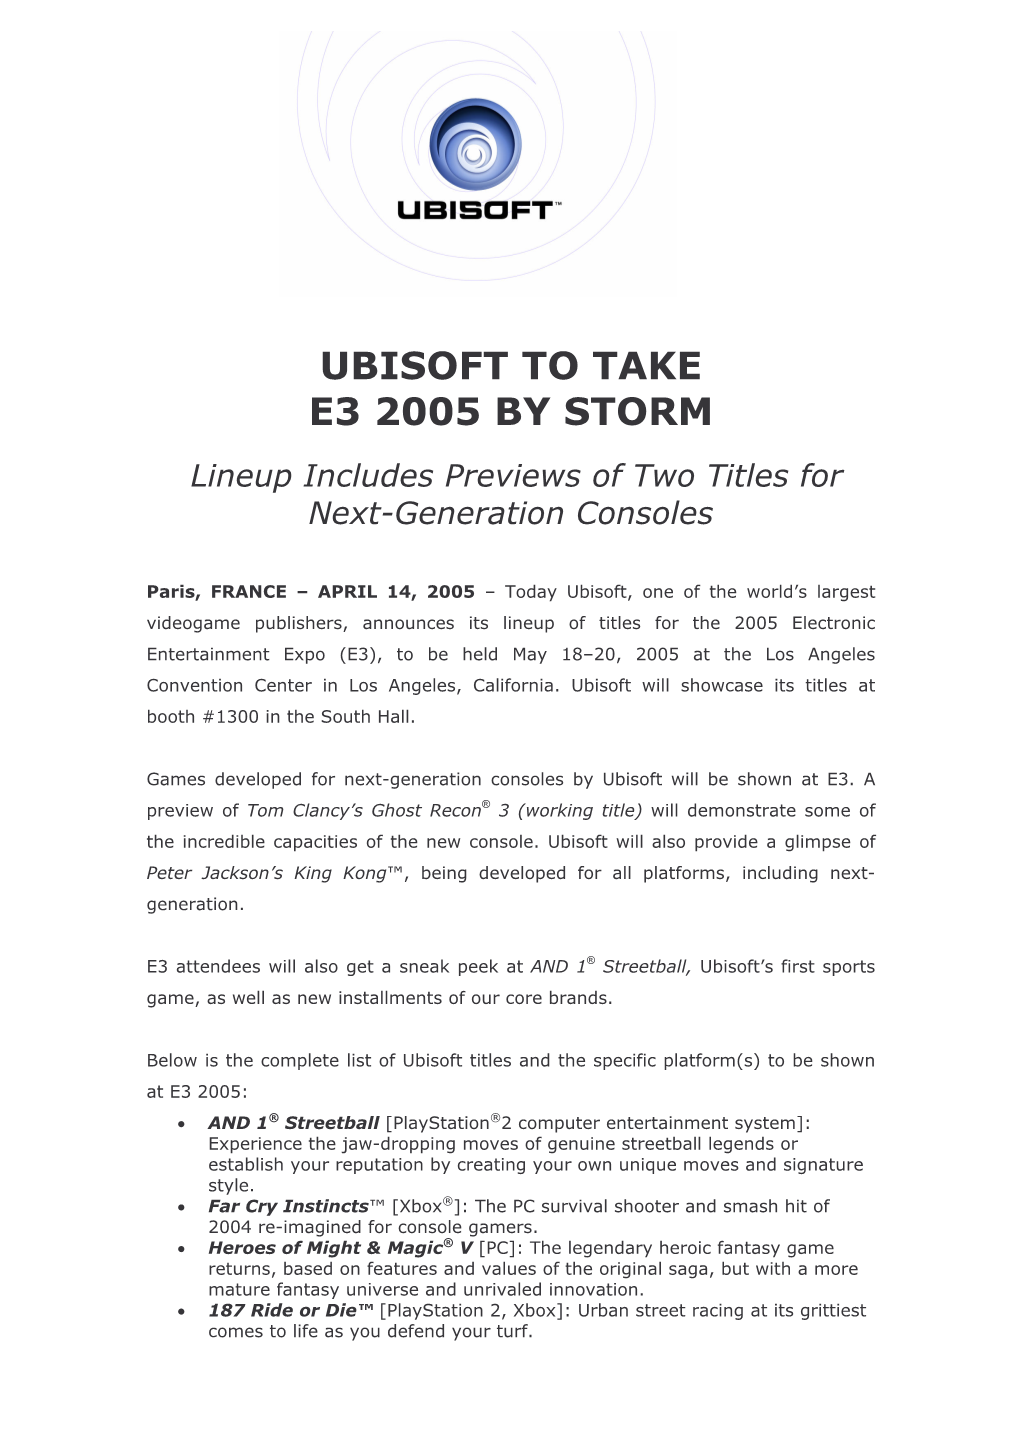 Ubisoft to Take E3 2005 by Storm